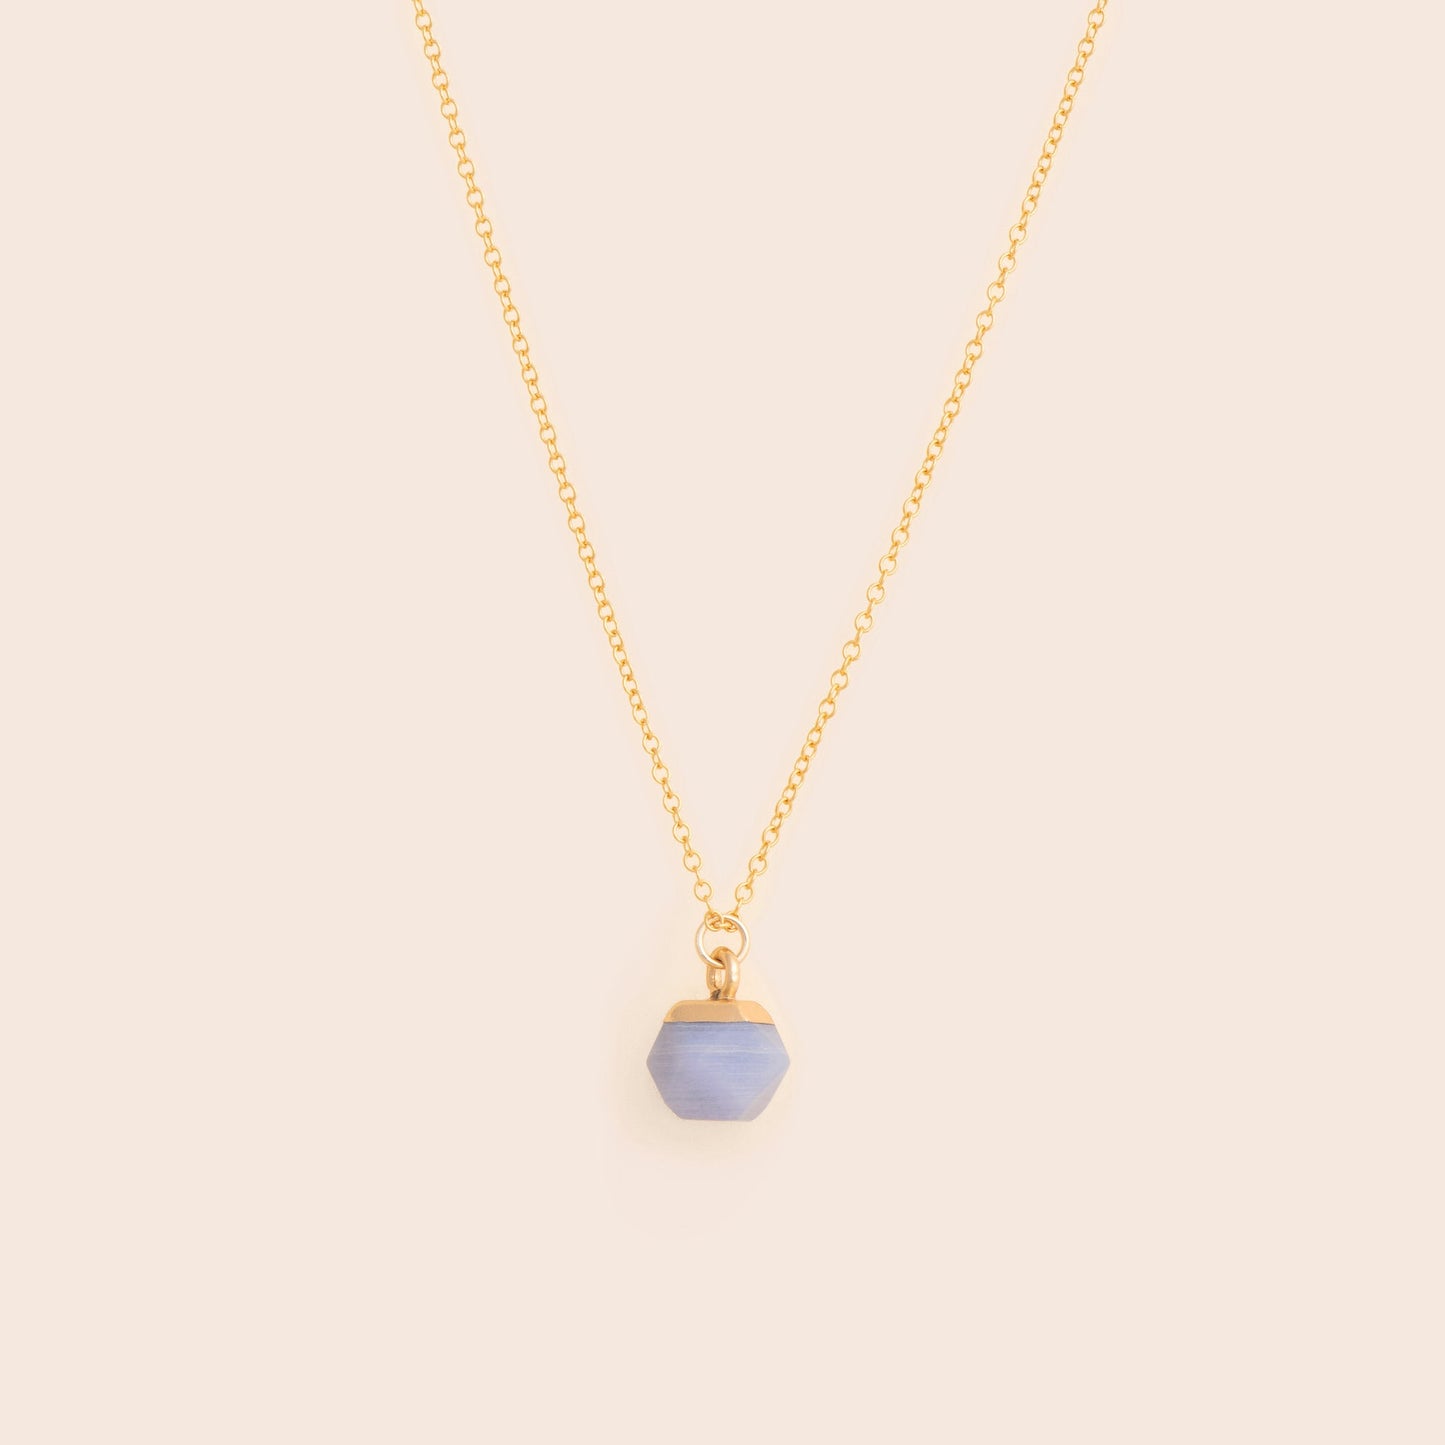 Blue Lace Agate Nugget Necklace - Gemlet